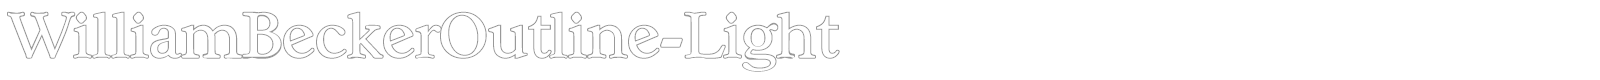 WilliamBeckerOutline-Light font preview